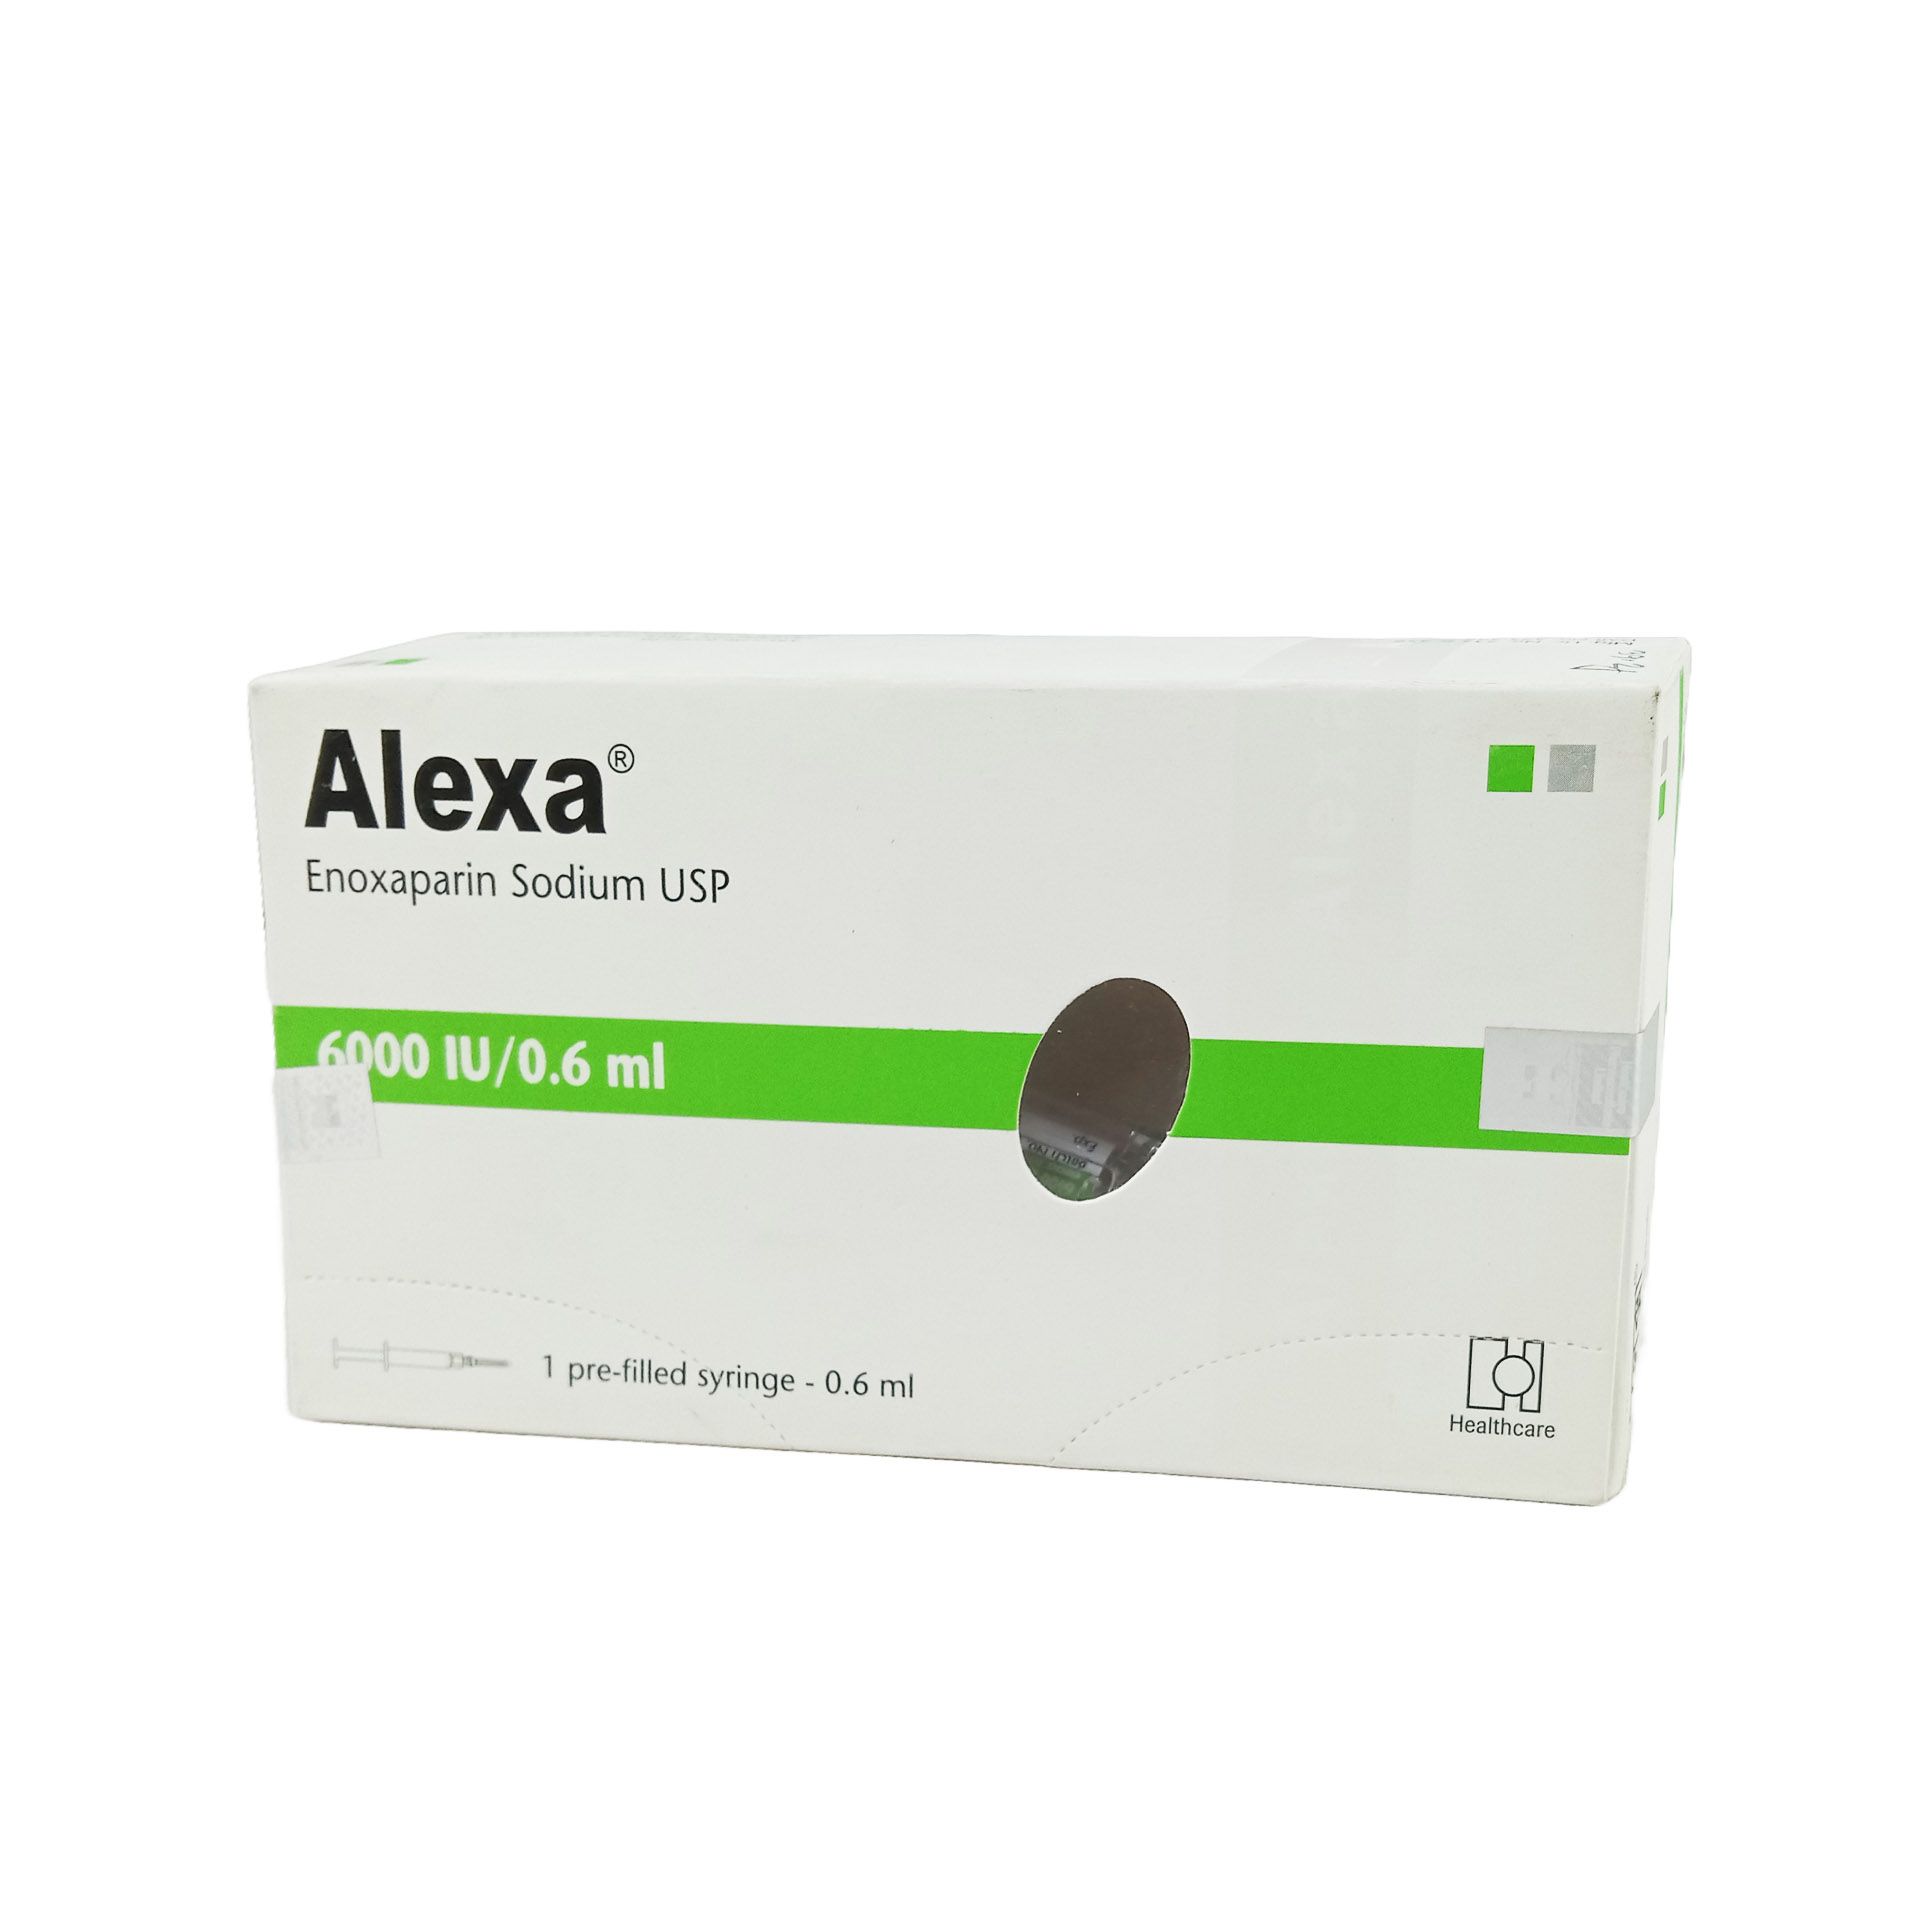 Alexa 60mg/0.6ml Injection